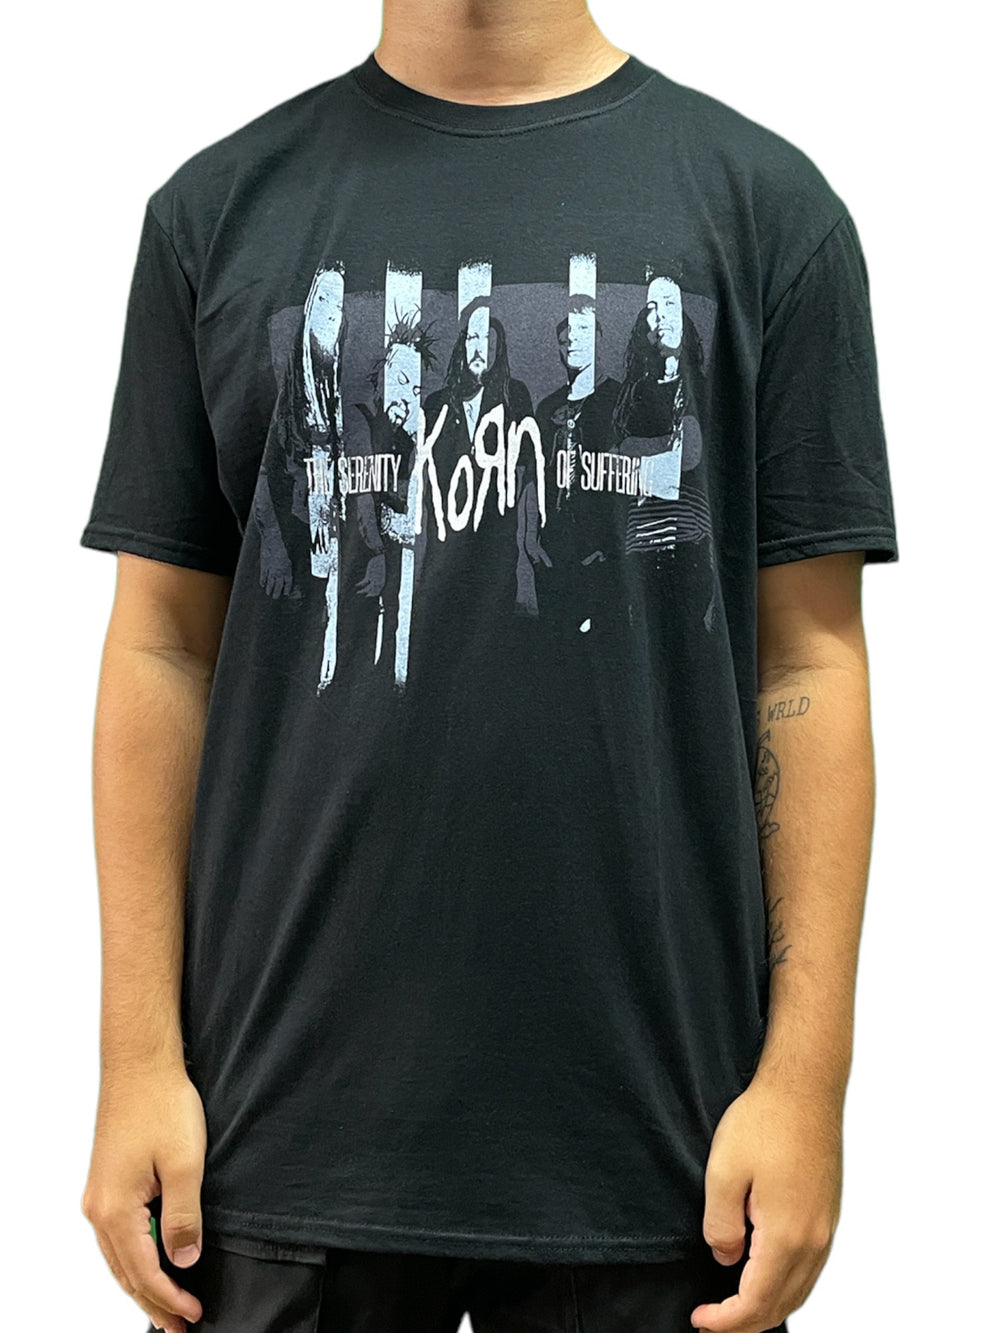 Korn BLOCK PHOTO Unisex Official T Shirt Brand New Various Sizes